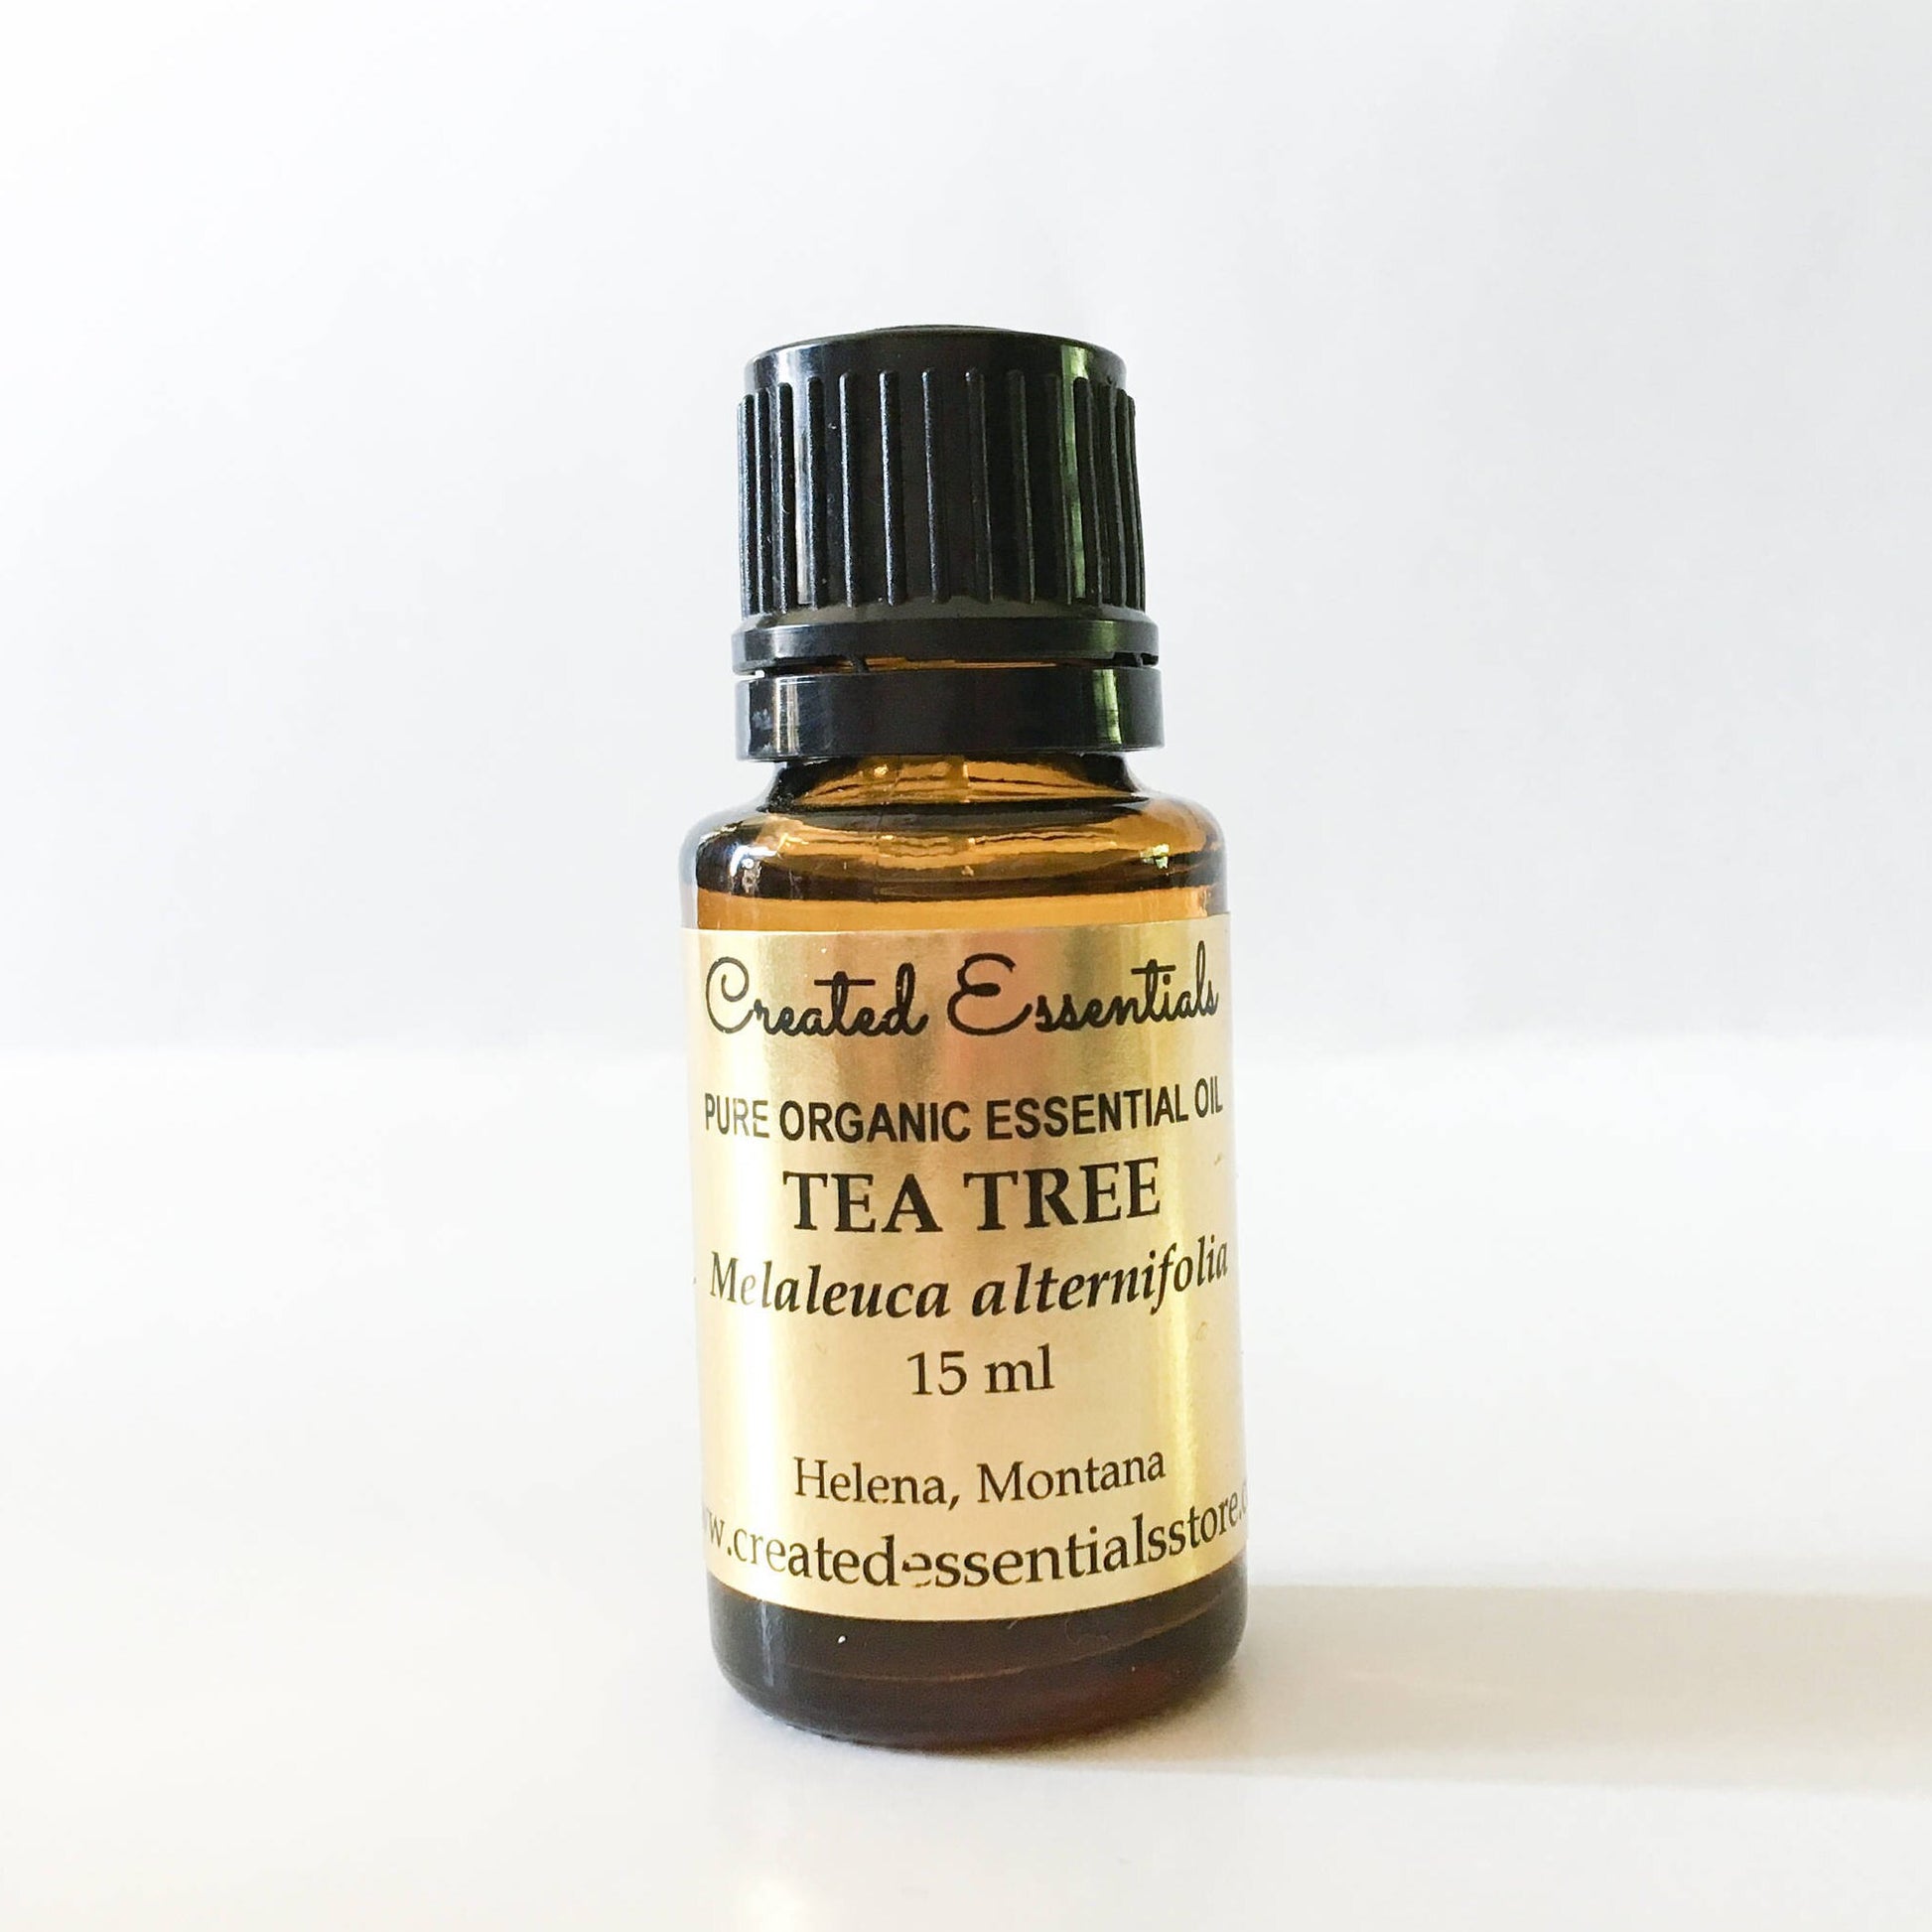 Tea Tree Essential Oil | Organic Essential Oil of Tea Tree | Pure Essential Oil | Therapeutic Essential Oil of Melaleuca alternifolia